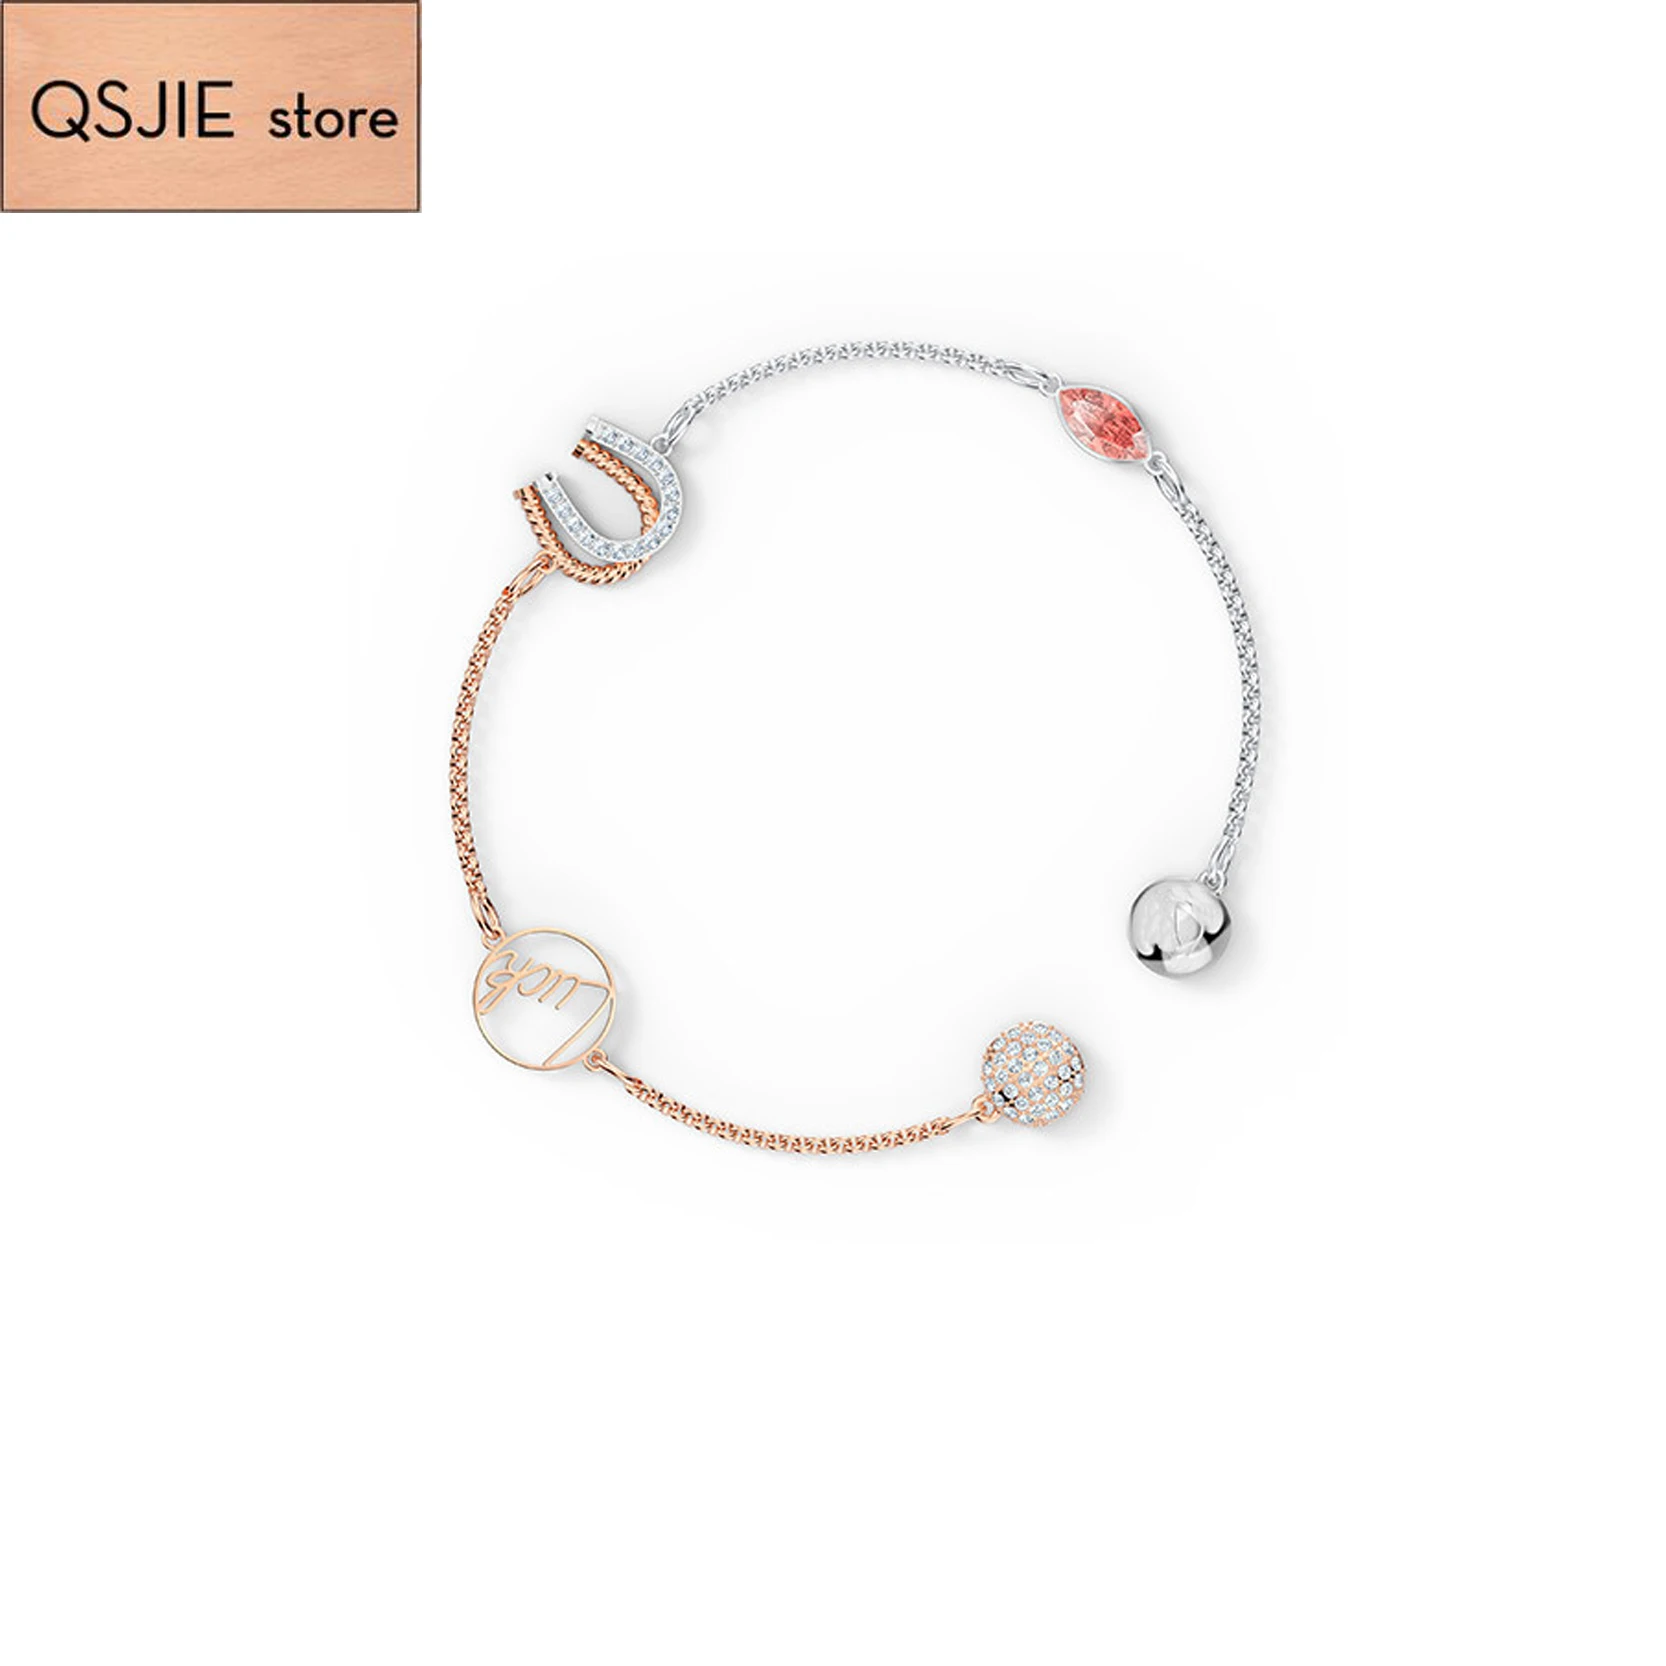 

QSJIE High quality SWA new. Magic chain horseshoe U shape fresh magnetic buckle design bracelet Charming fashion jewelry